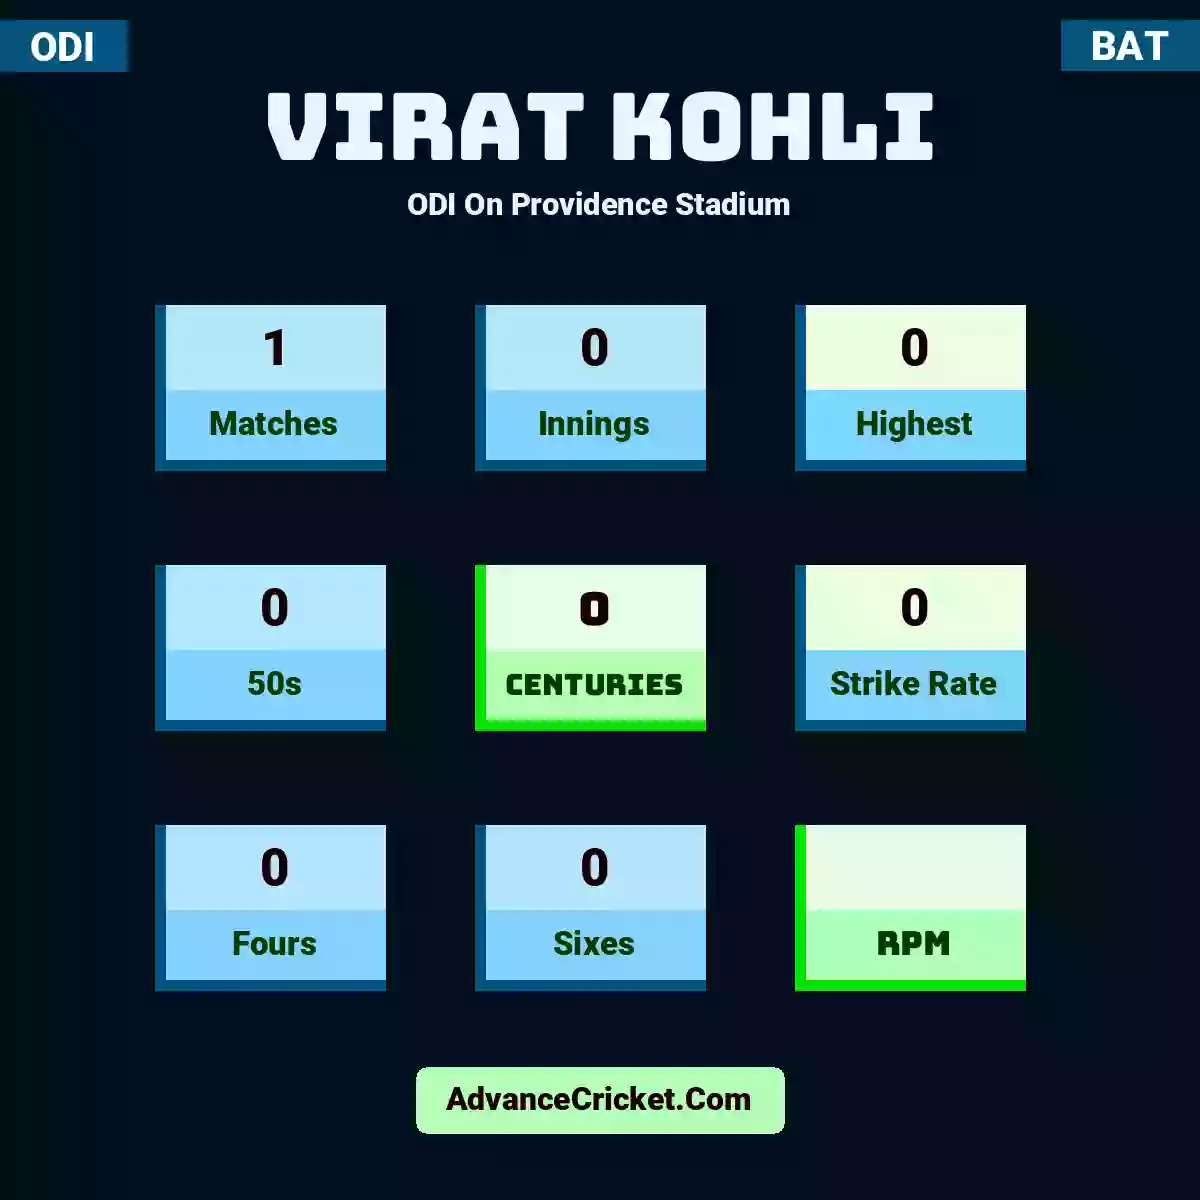 Virat Kohli ODI  On Providence Stadium, Virat Kohli played 1 matches, scored 0 runs as highest, 0 half-centuries, and 0 centuries, with a strike rate of 0. V.Kohli hit 0 fours and 0 sixes.